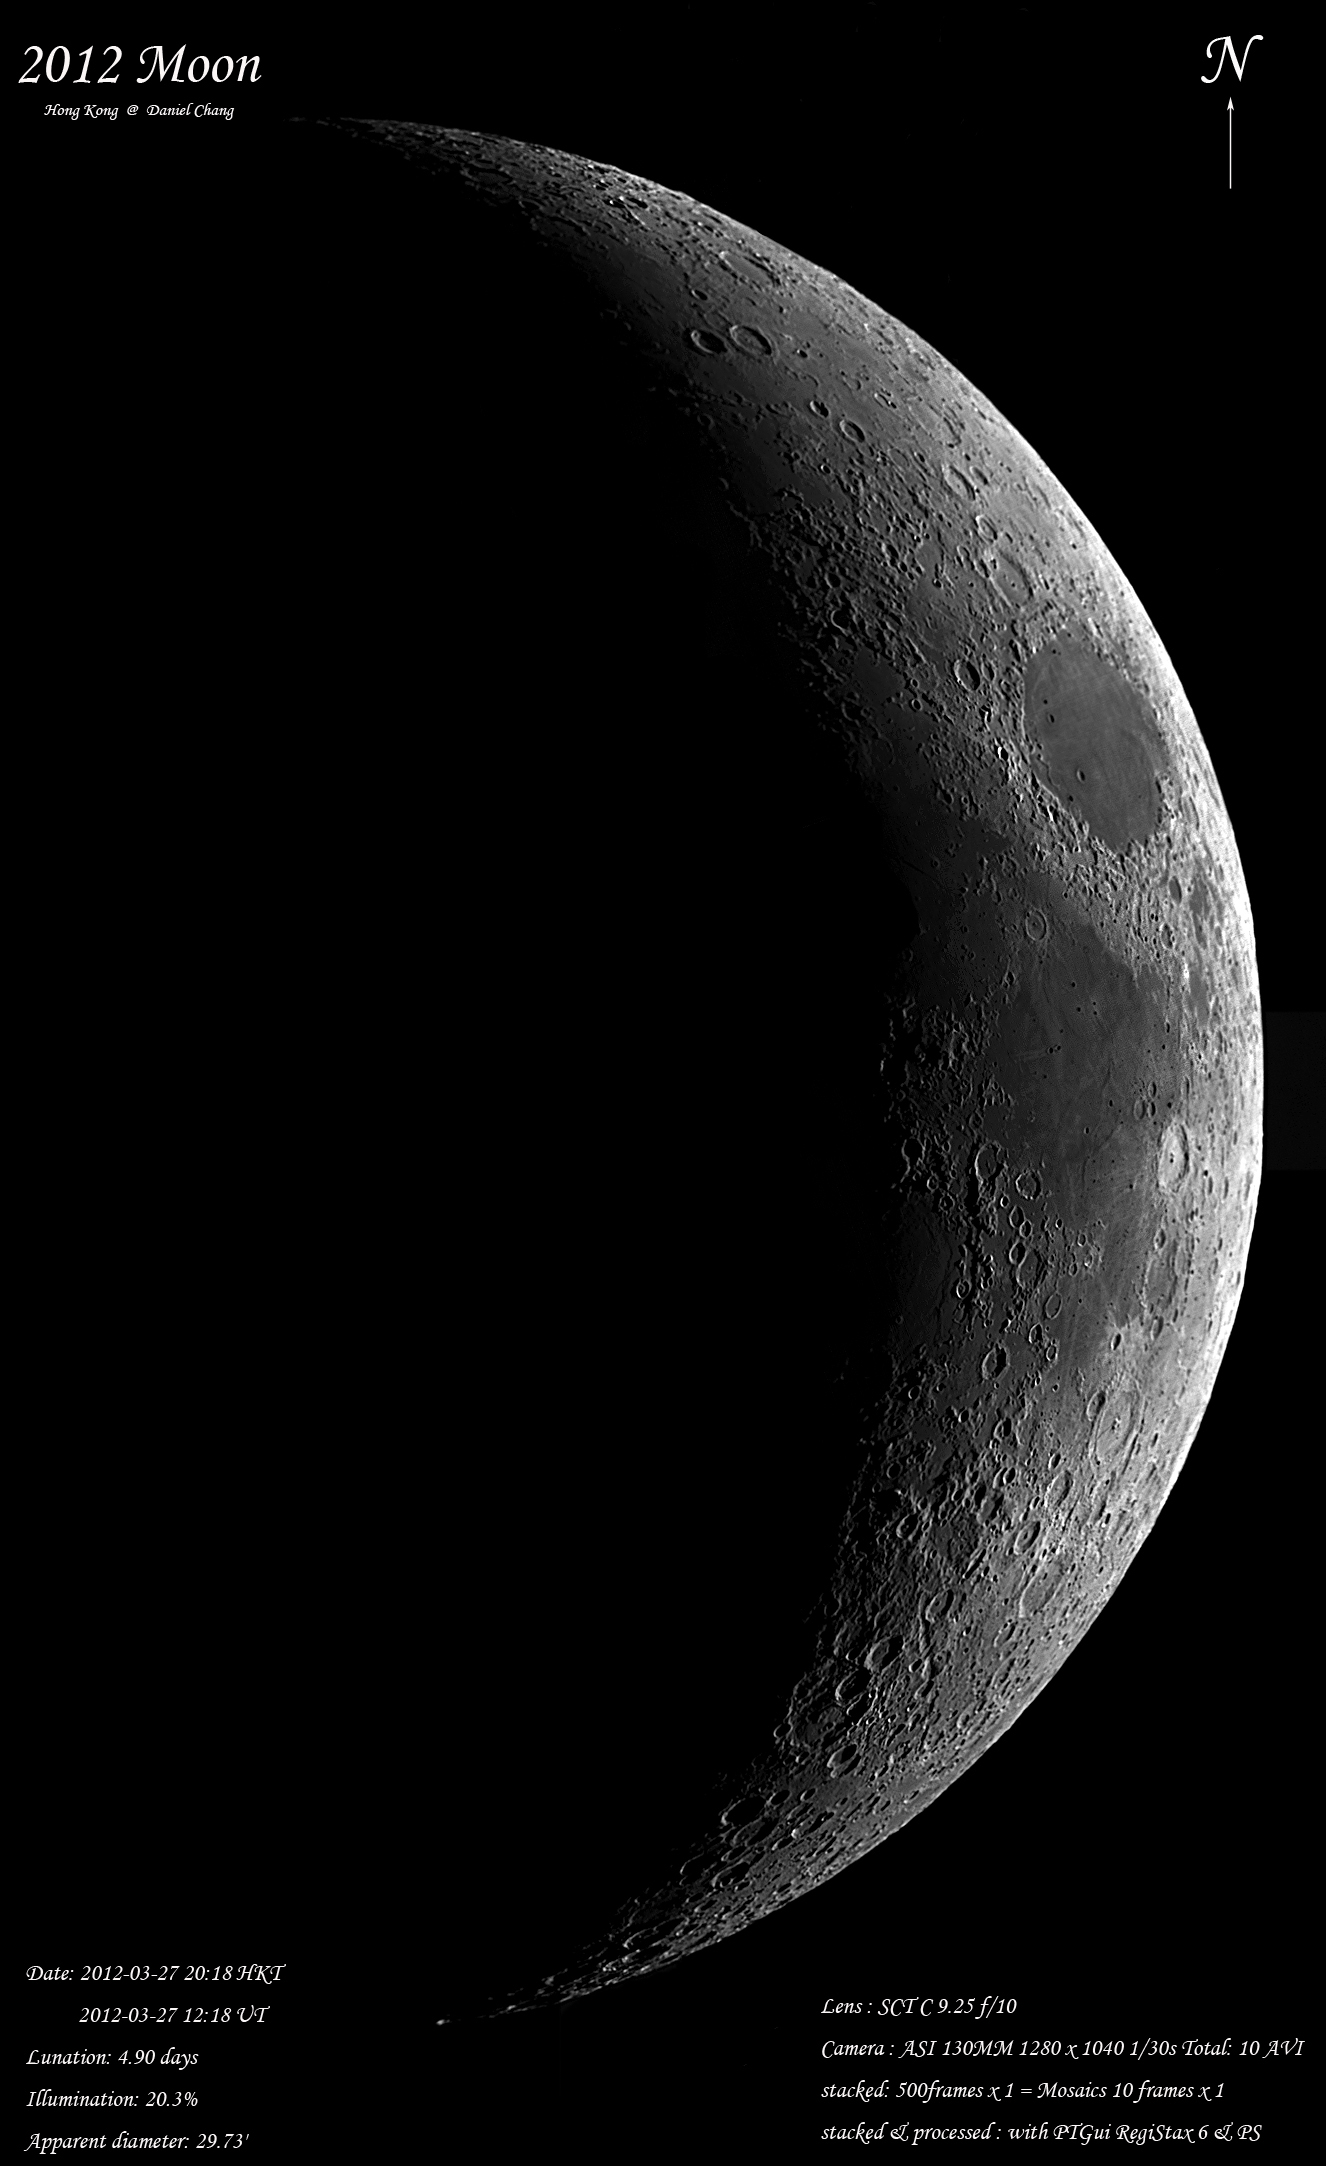 2012 moon age 4.9days 20120327_2018NT 2166x1326.jpg